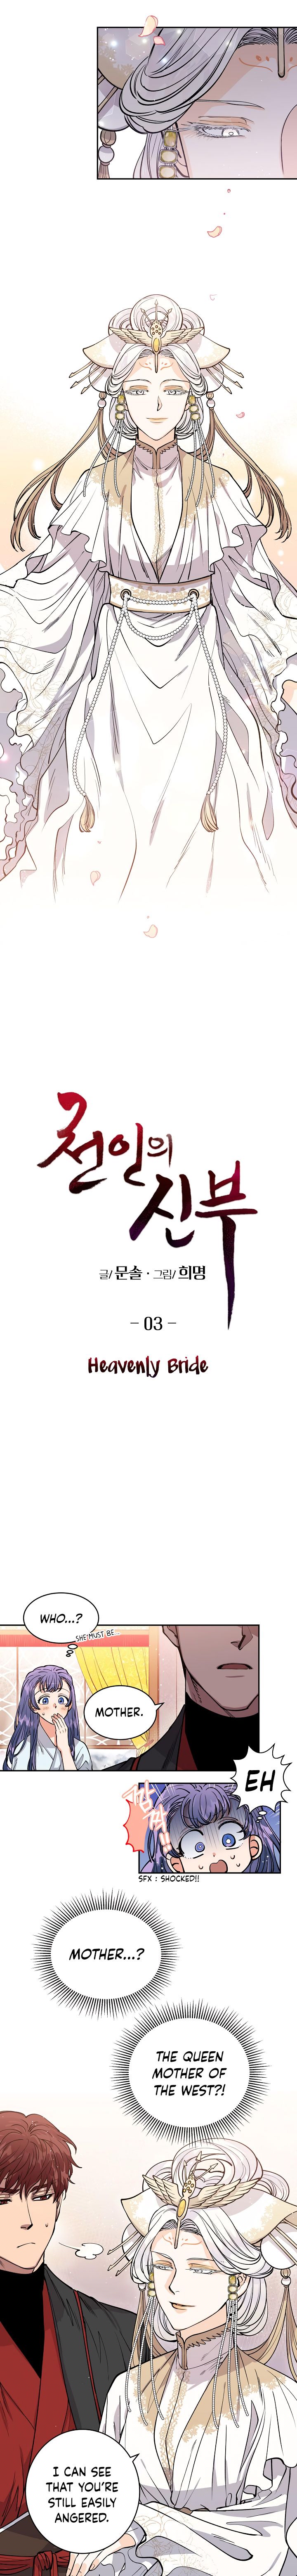 Heavenly Bride chapter 3